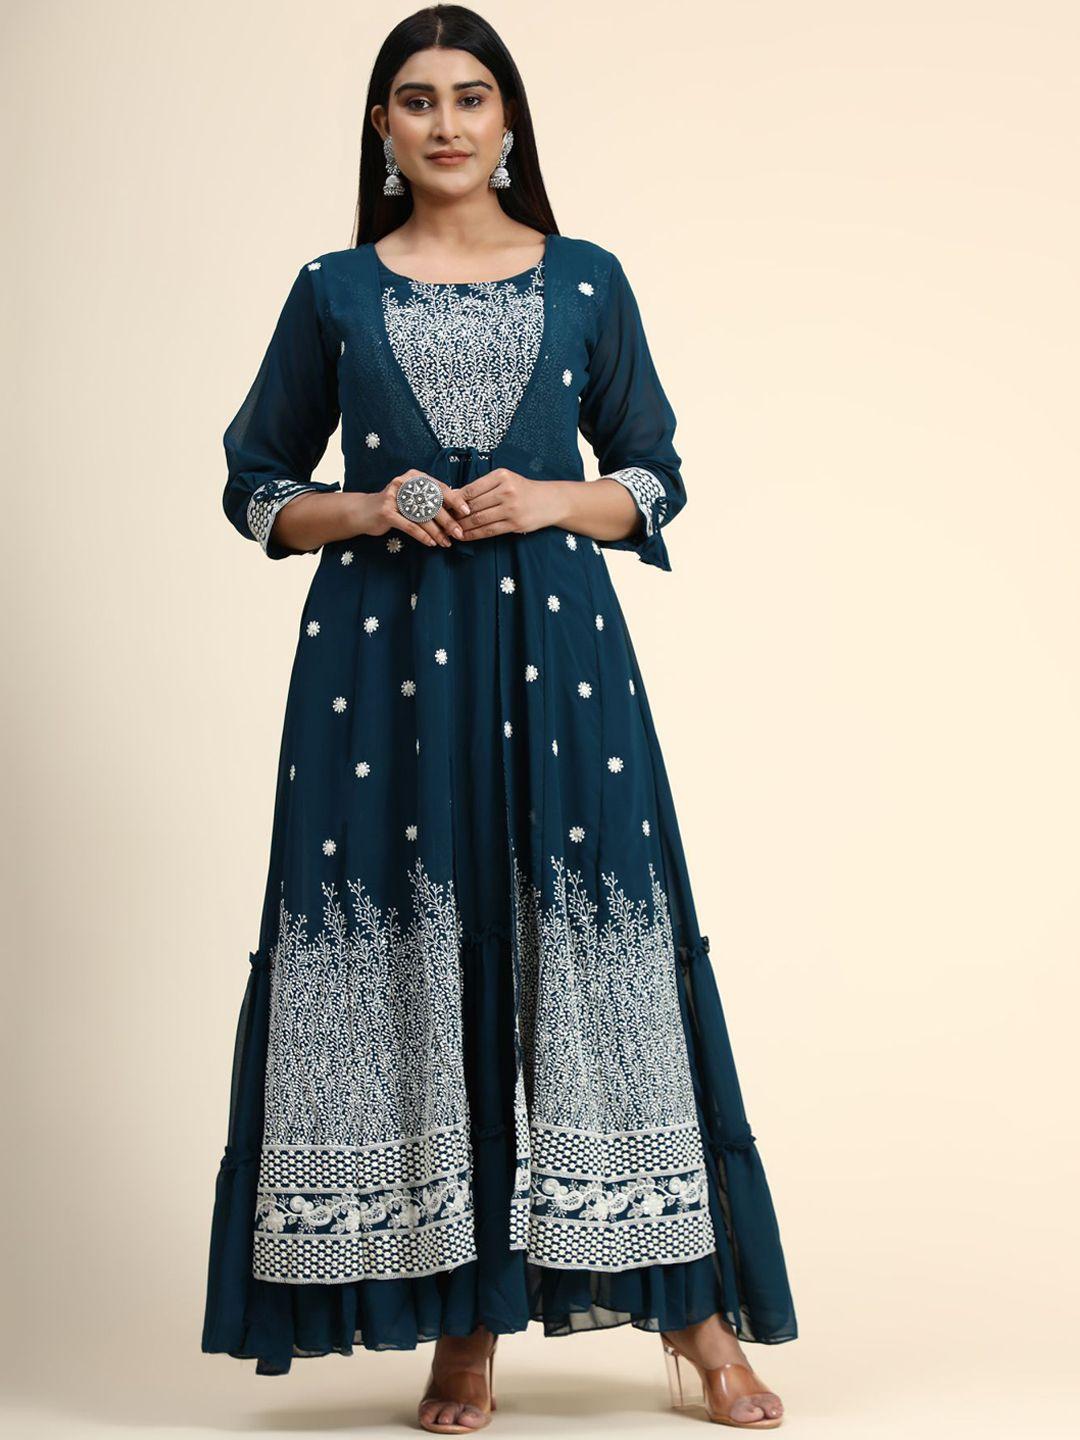 kalini-women-teal-blue-embellished-layered-ethnic-dress